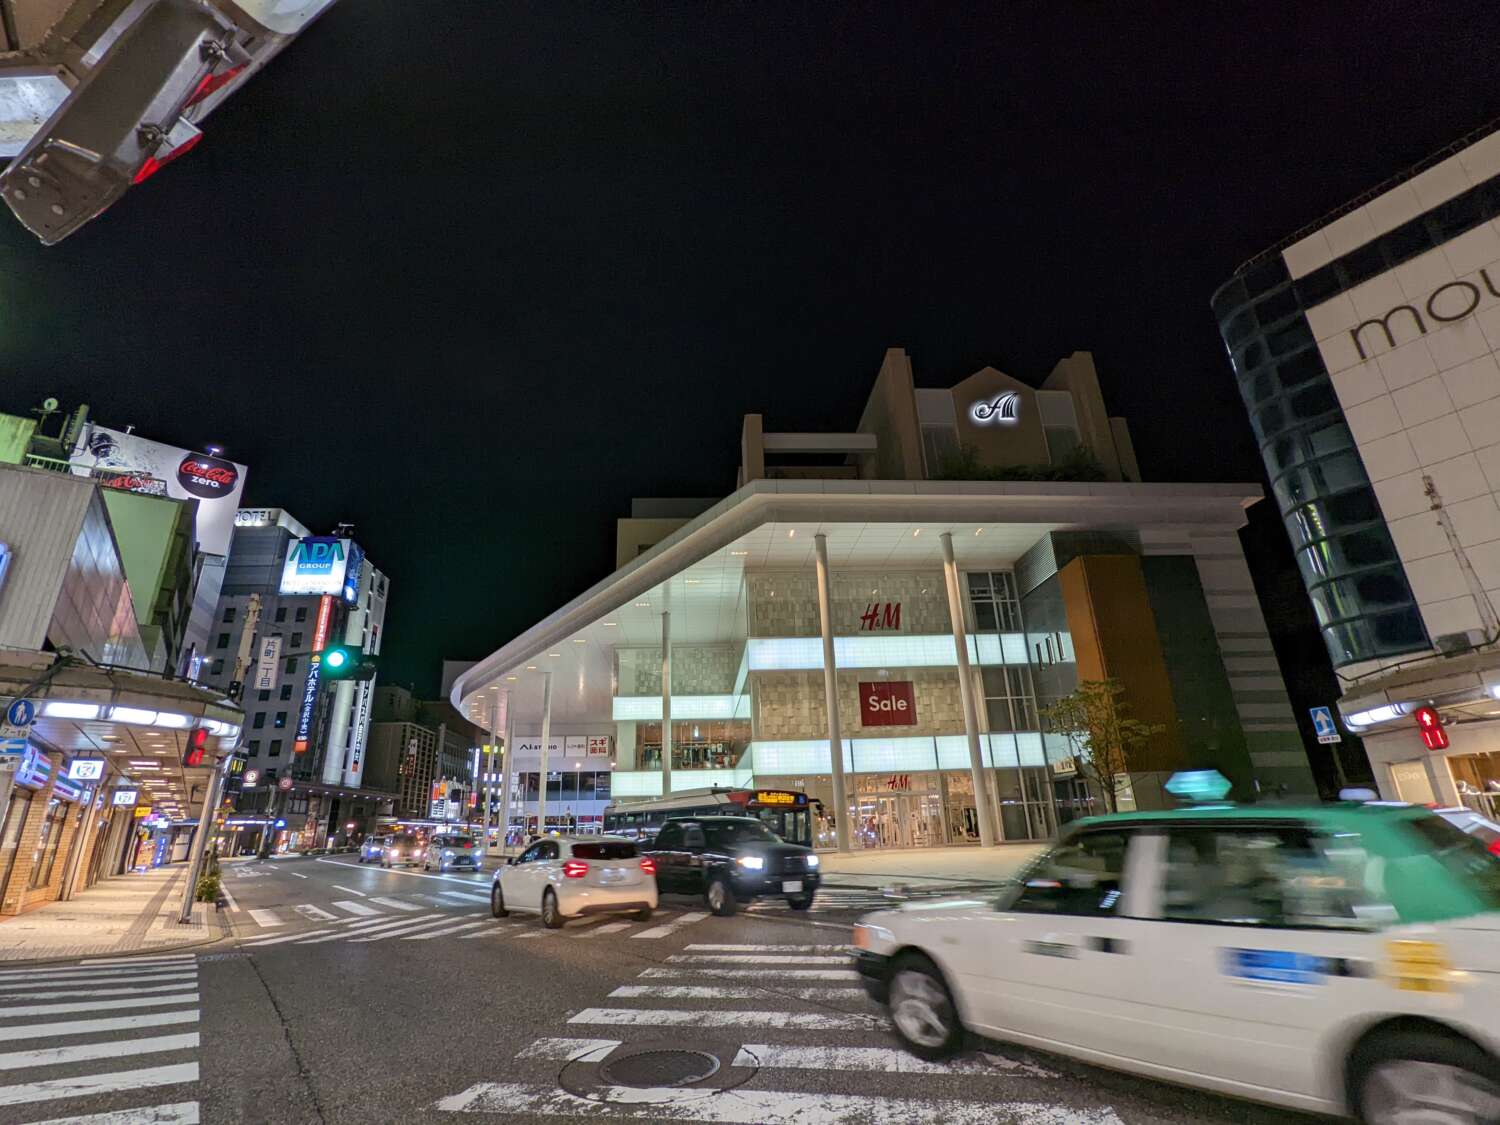 Pixel 6aの超広角カメラで夜の街を撮影